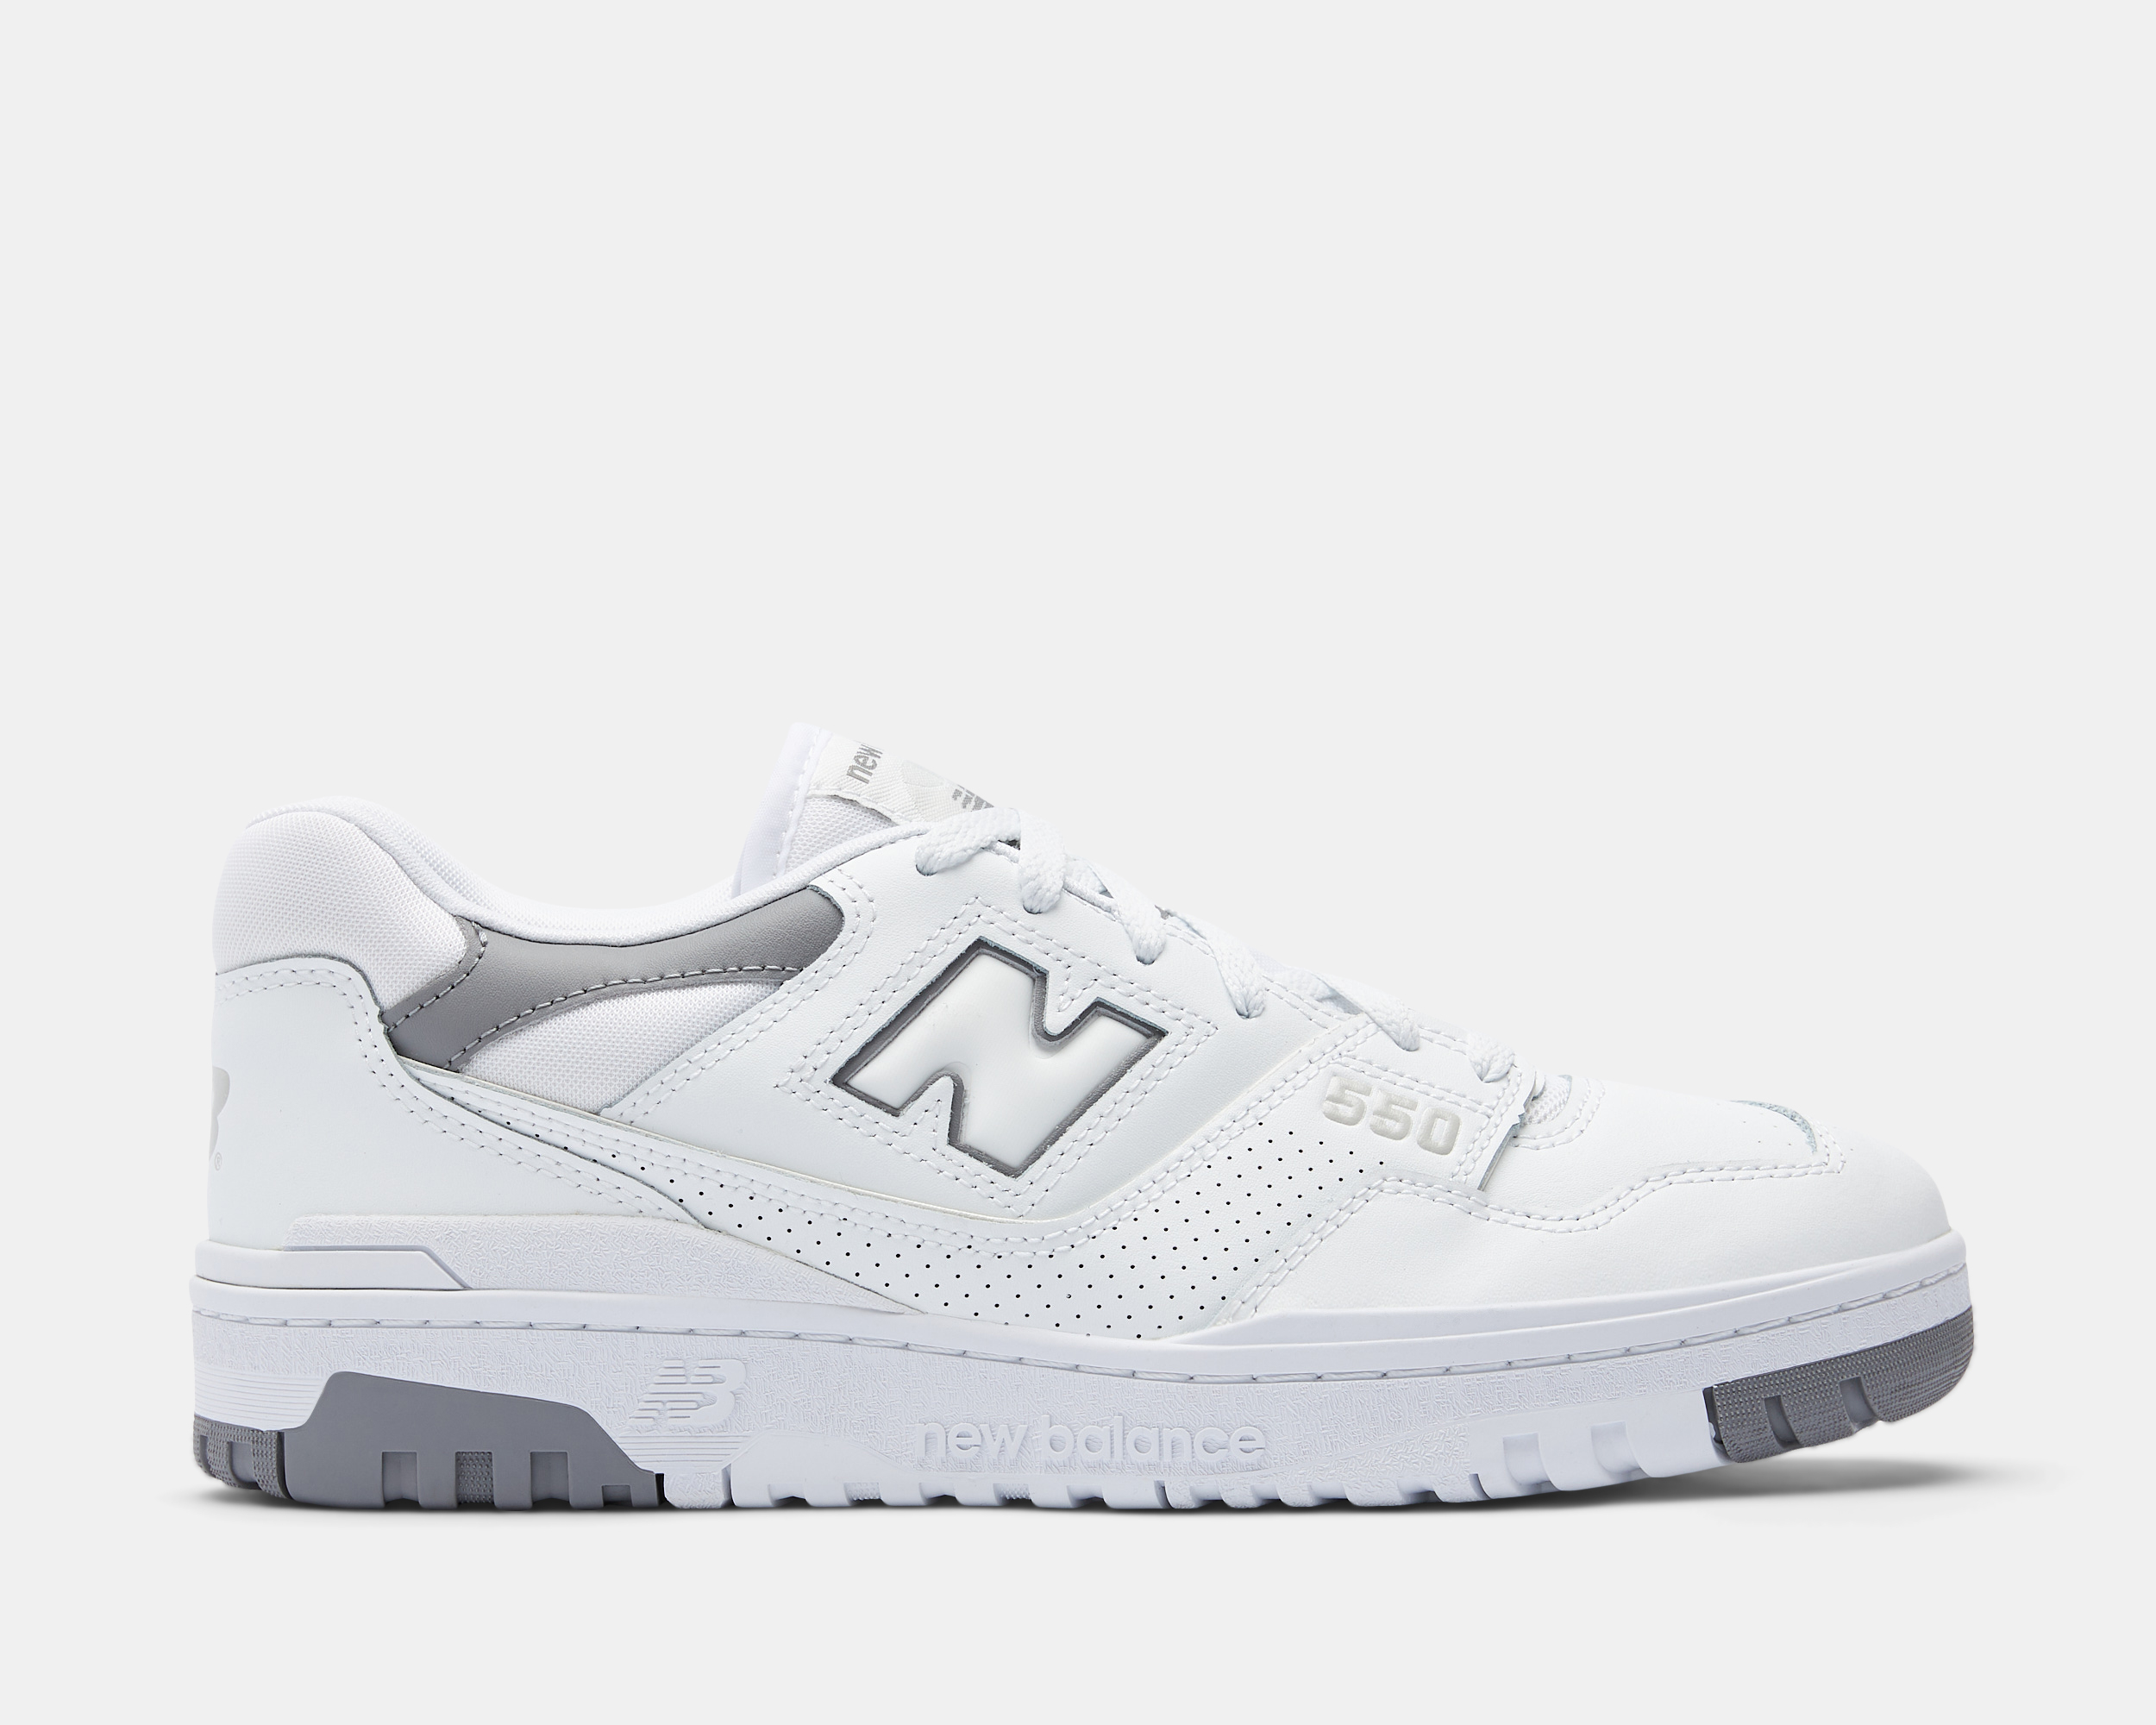 New Balance Men's 550 Sneakers - White/Shadow Grey/Summer Fog | Catch ...